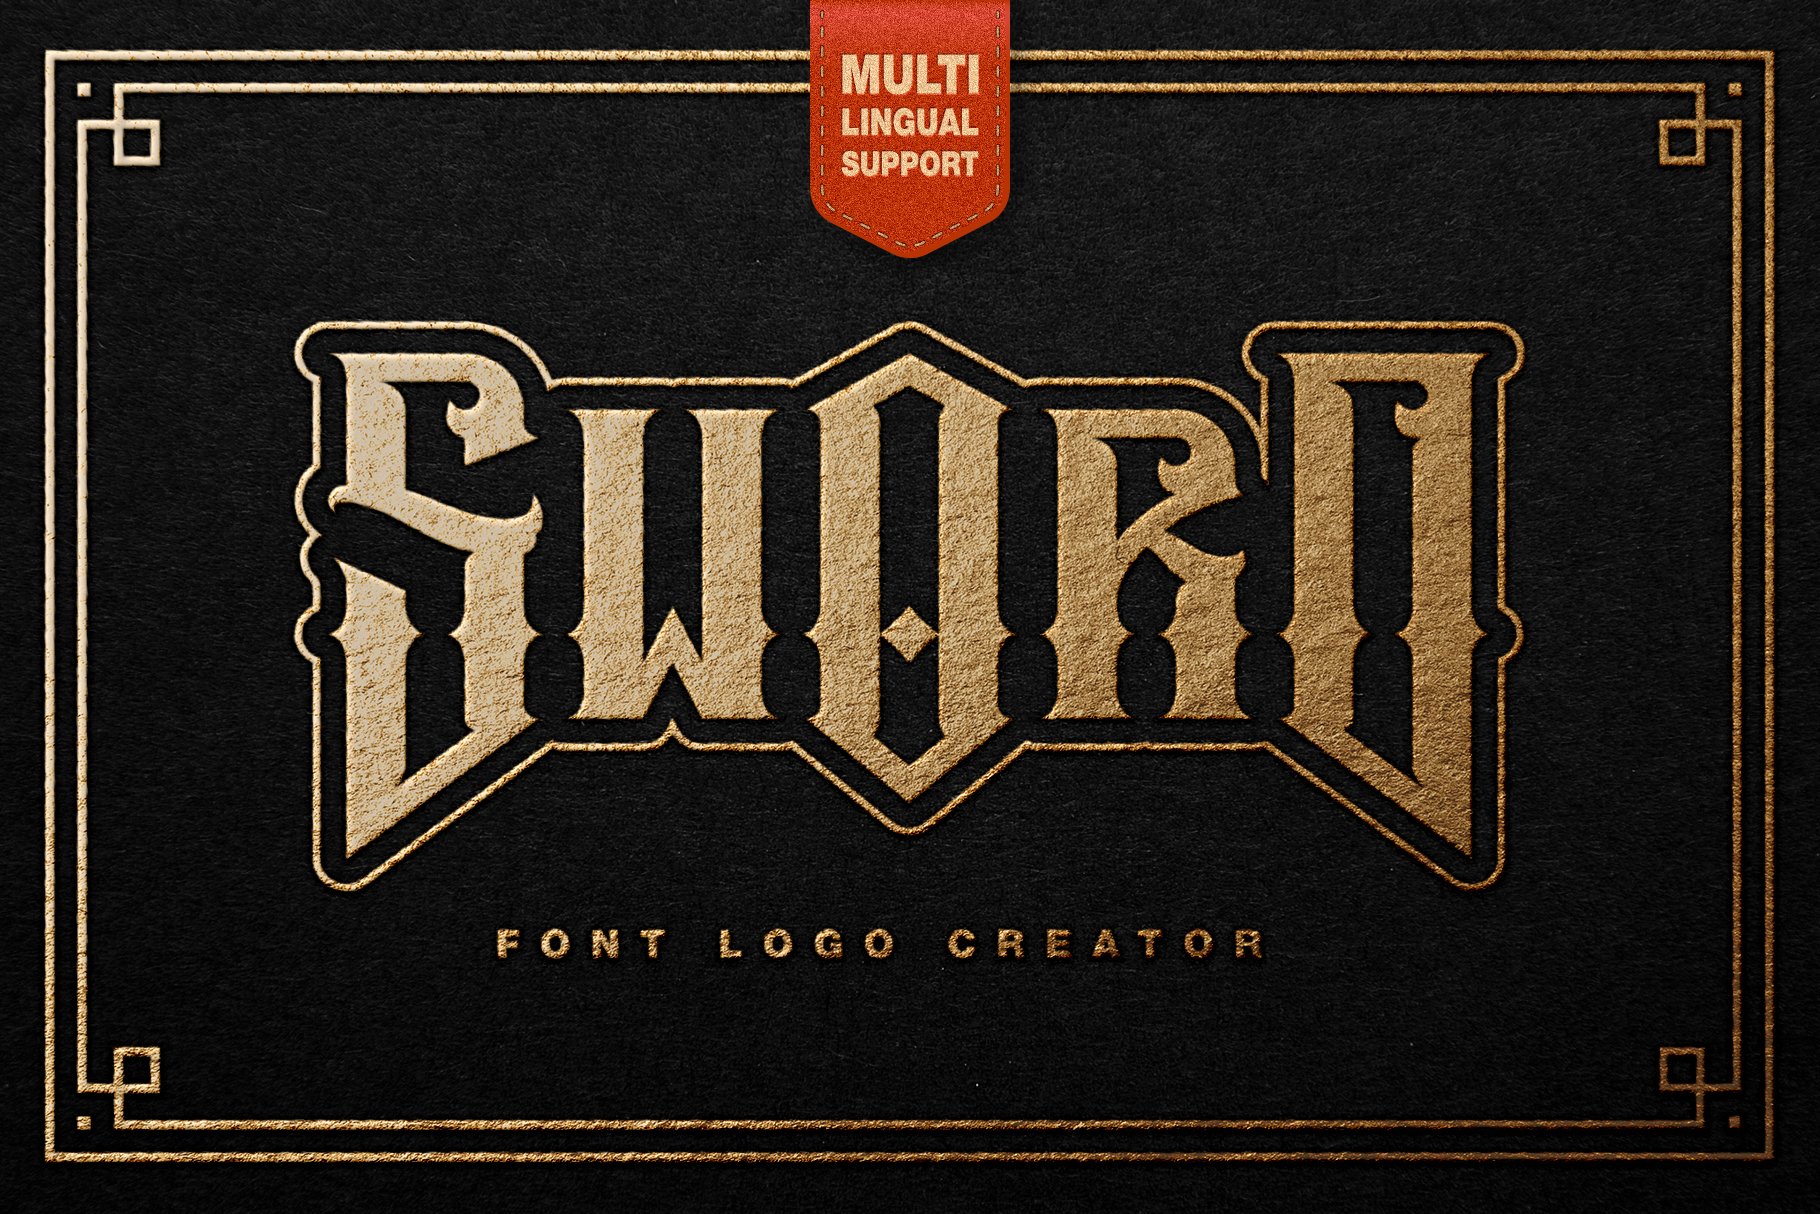 Sword Font Logo Creator cover image.